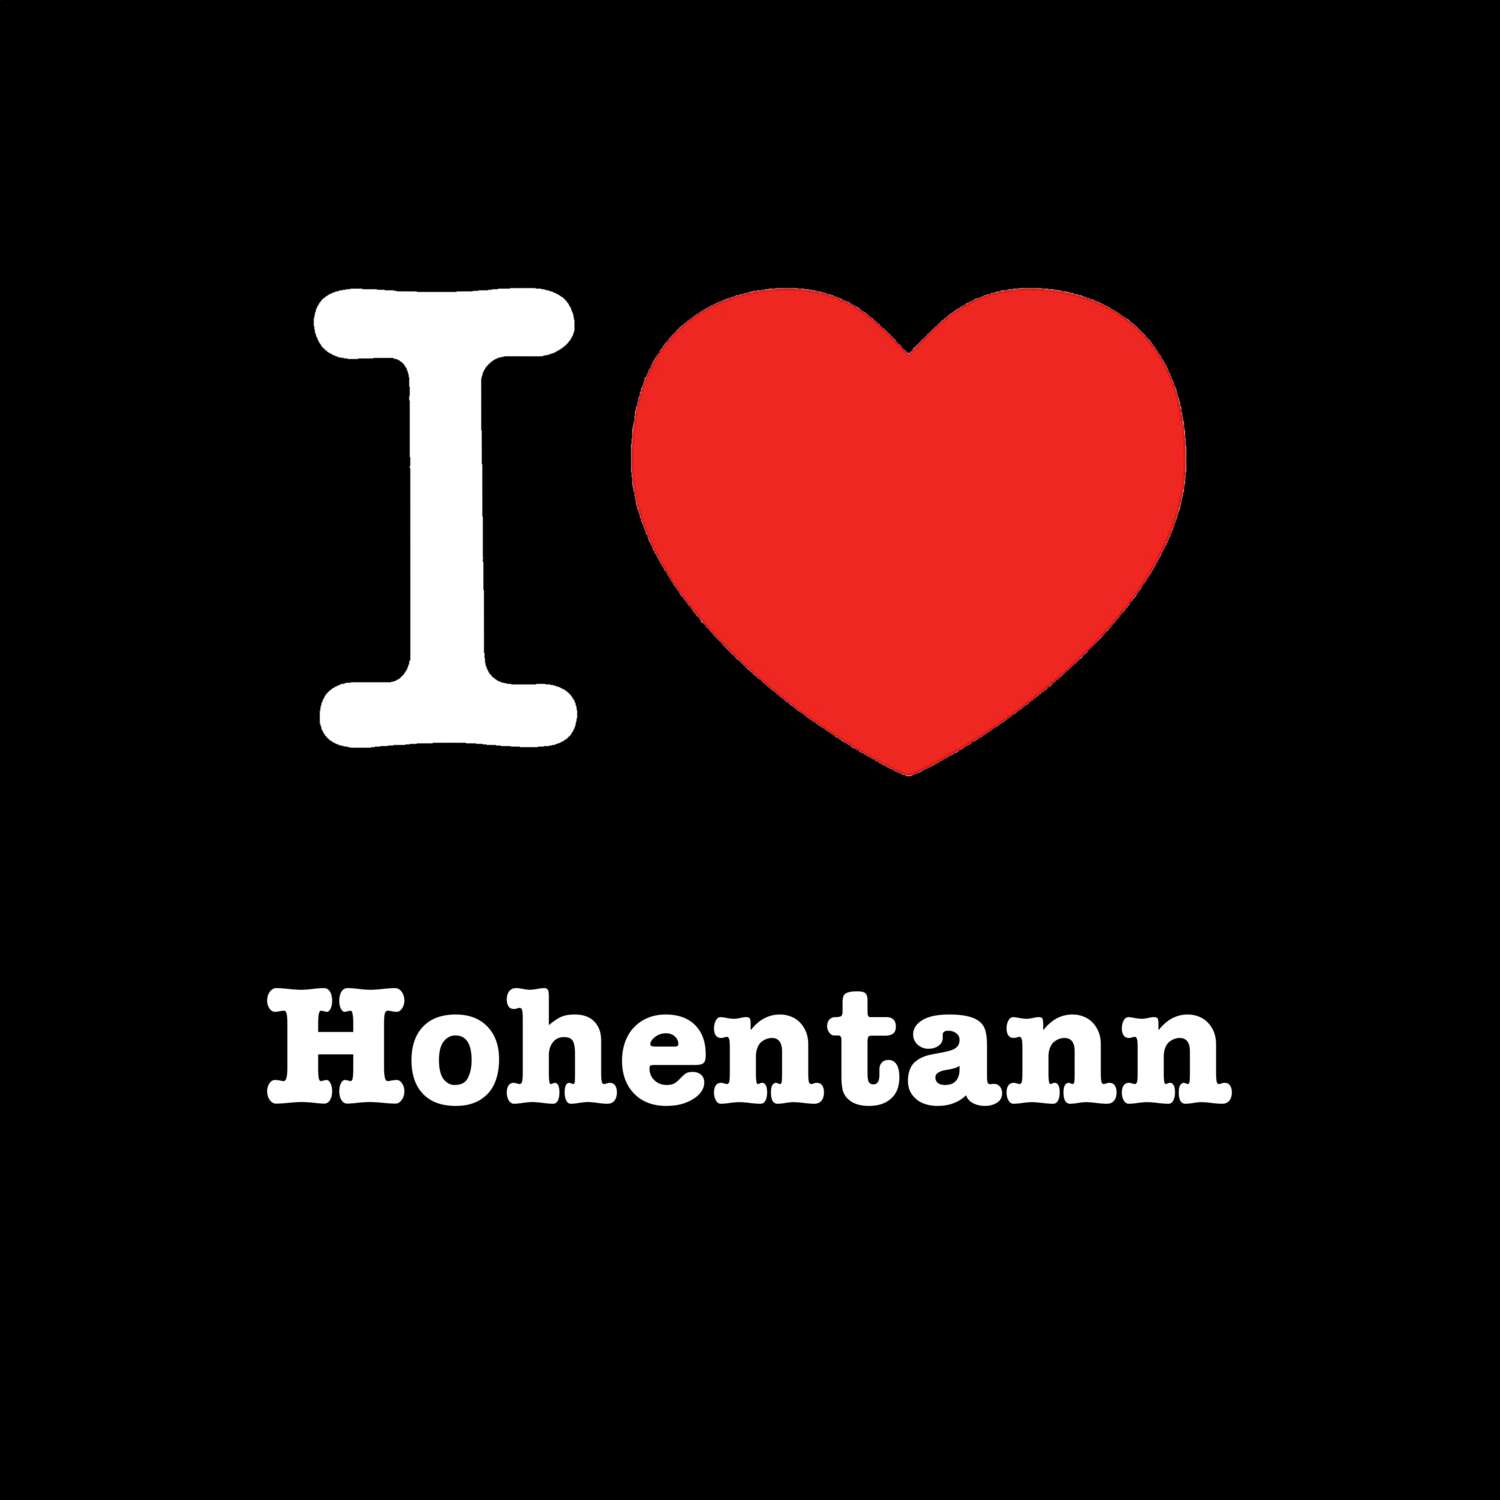 Hohentann T-Shirt »I love«